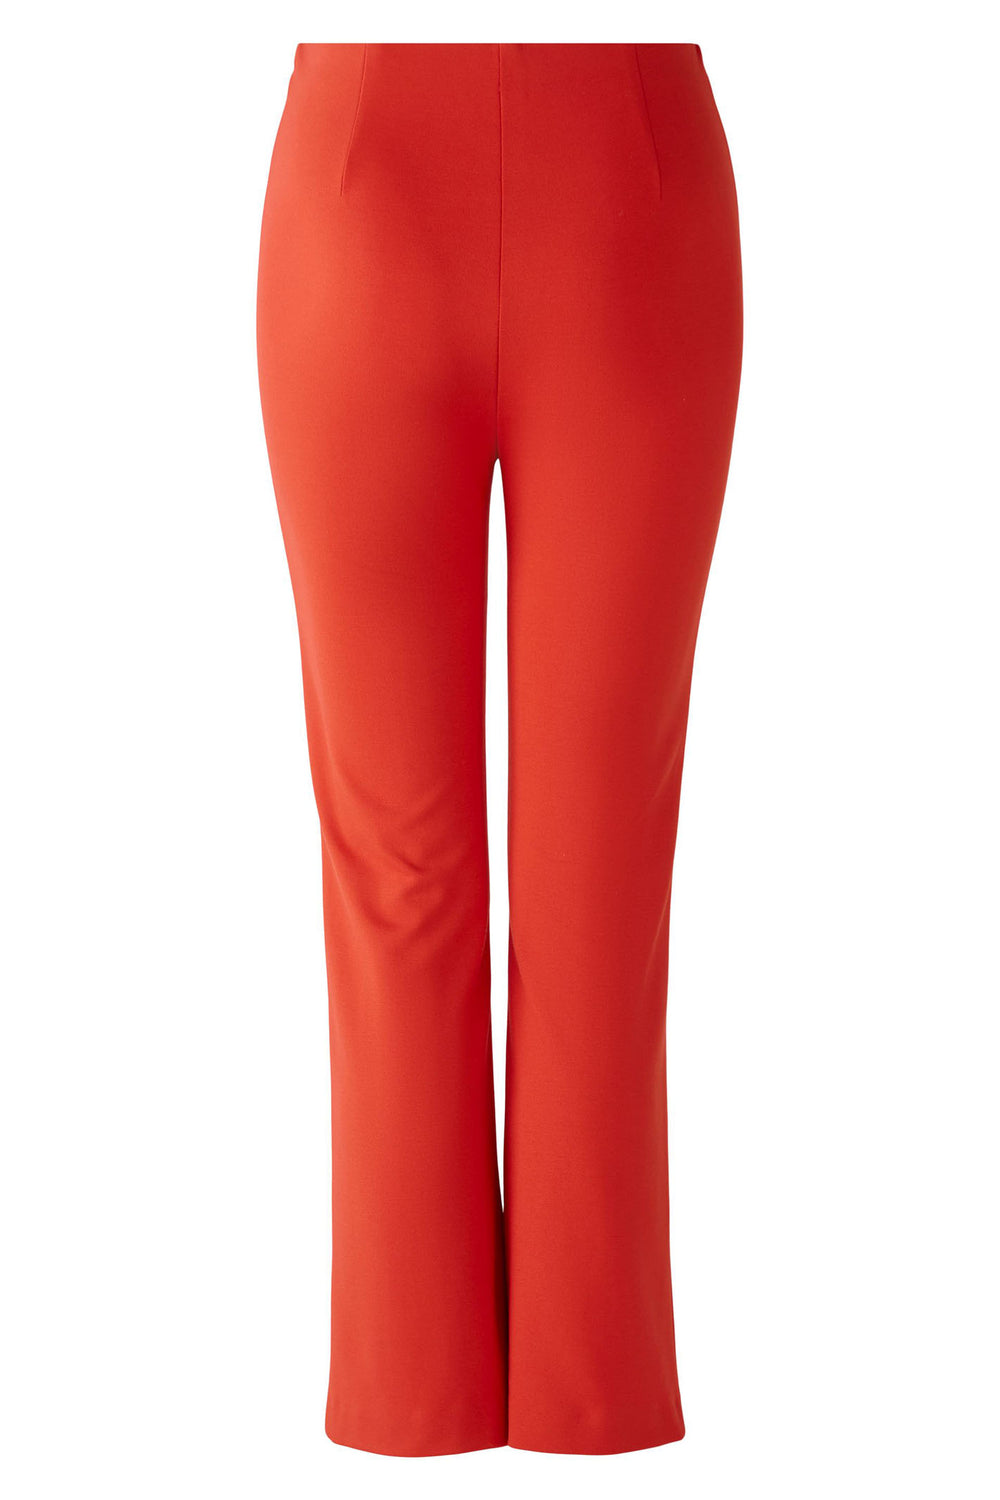 Oui 85724 Aura Orange Jersey Trousers - Olivia Grace Fashion